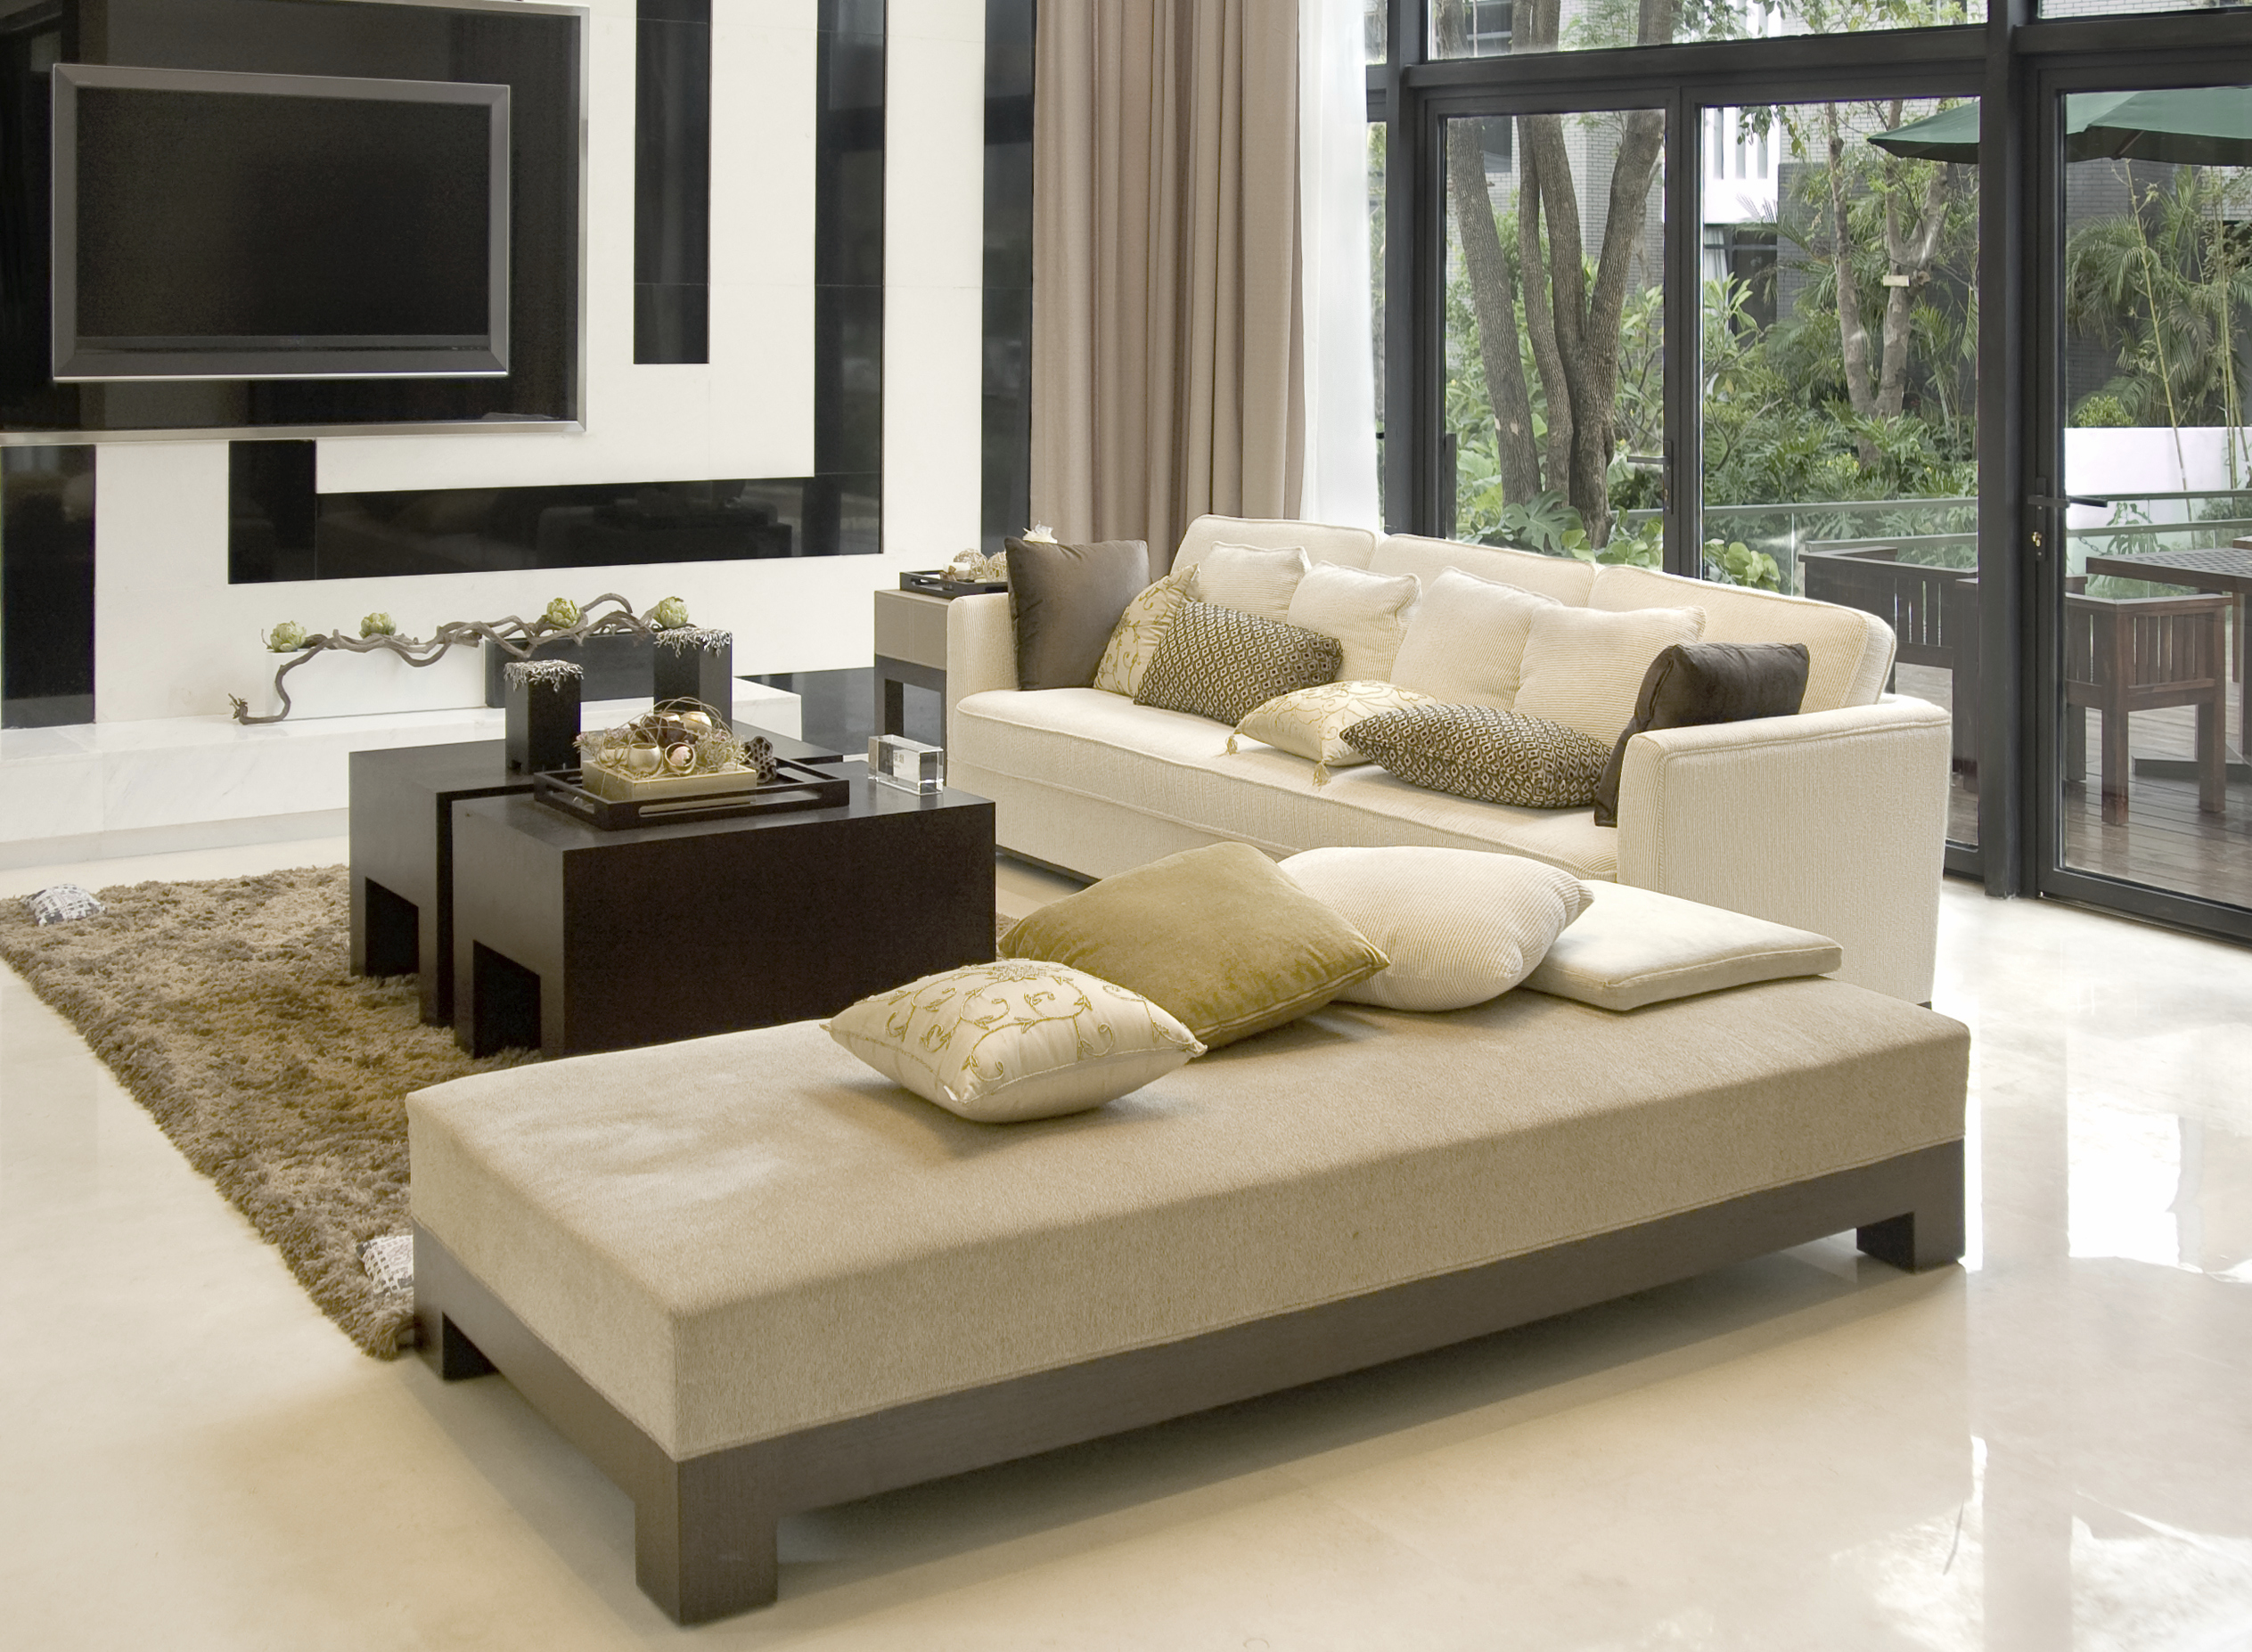 Home Interior Design Trends 2015